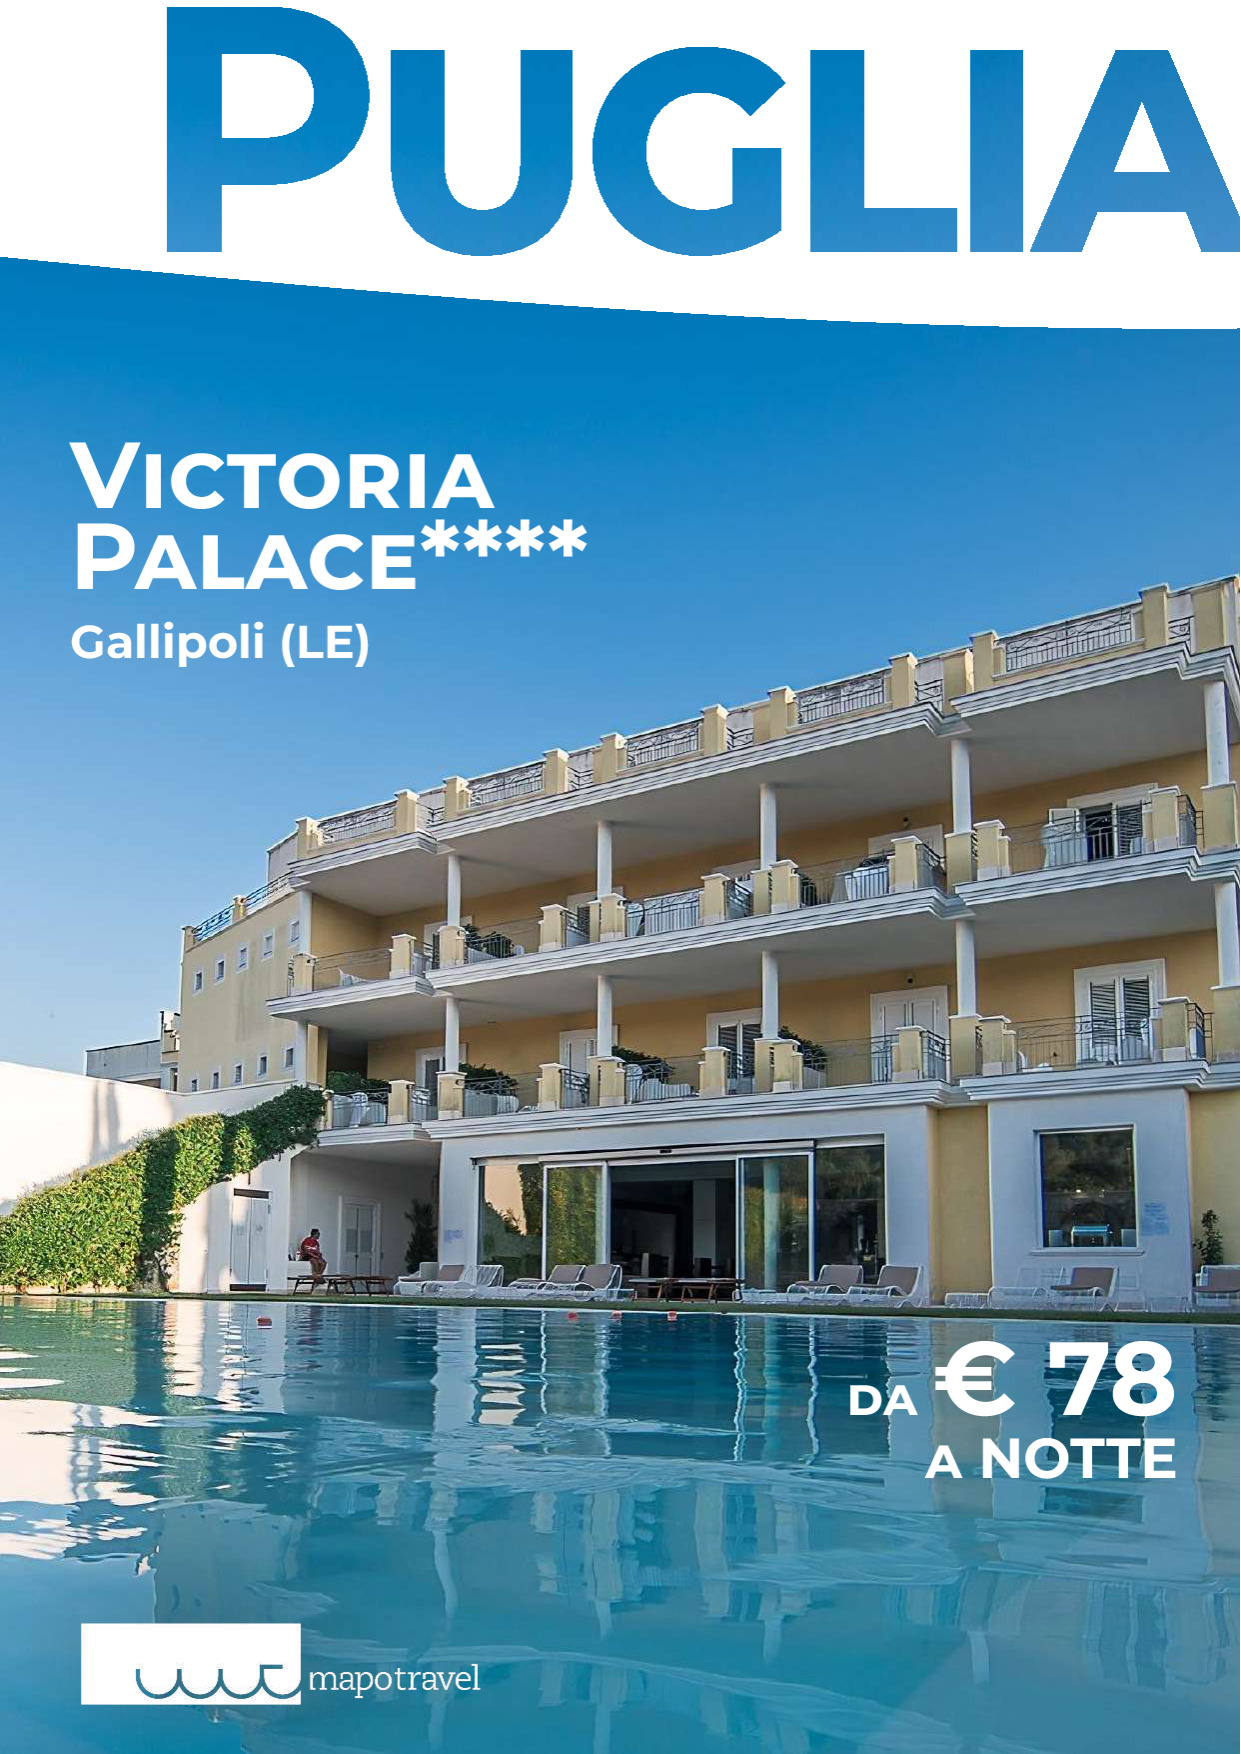 Victoria Palace - Gallipoli